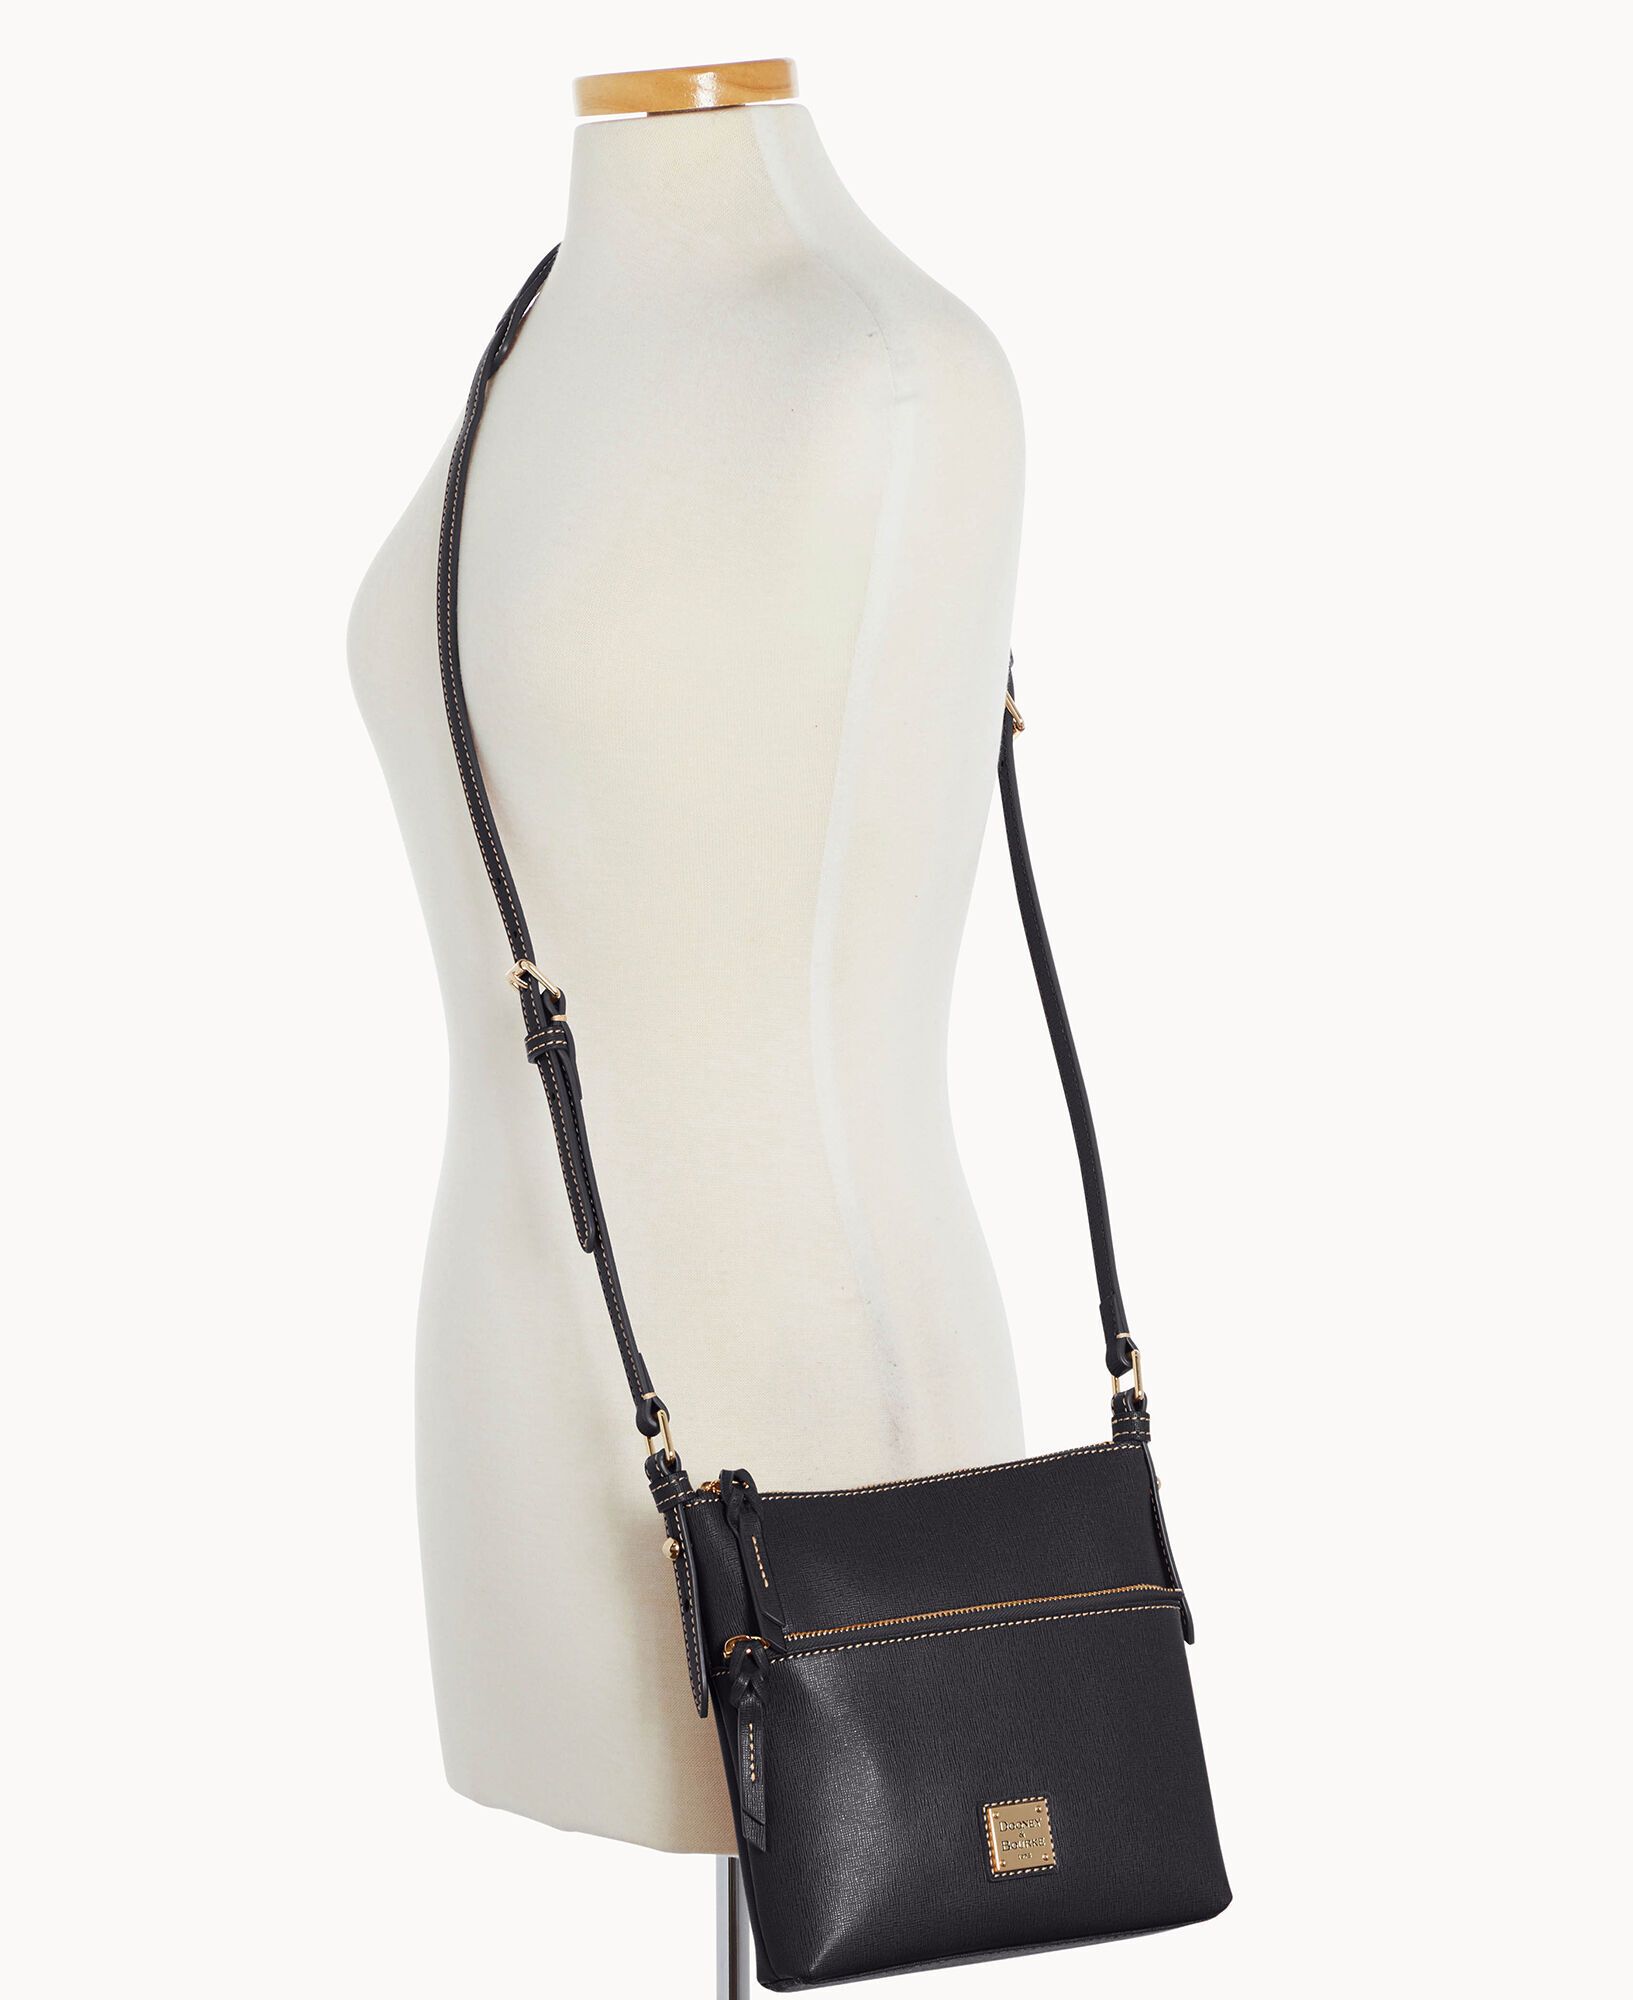 Dooney & Bourke Saffiano Letter Carrier Handbags Black : One Size